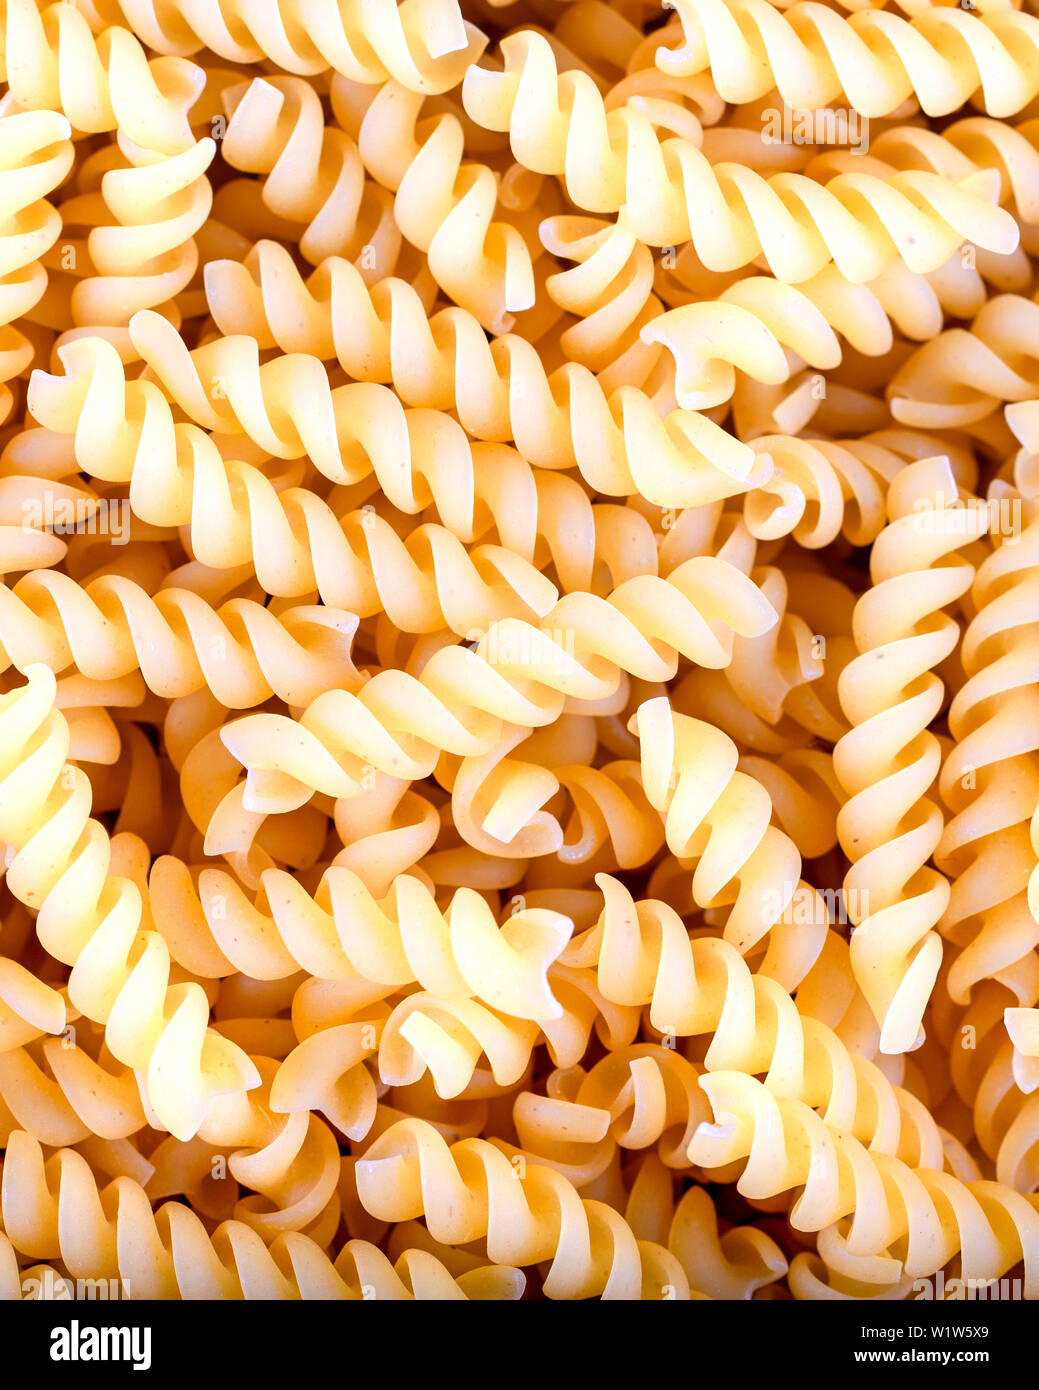 Uncooked fusilli pasta, background Stock Photo